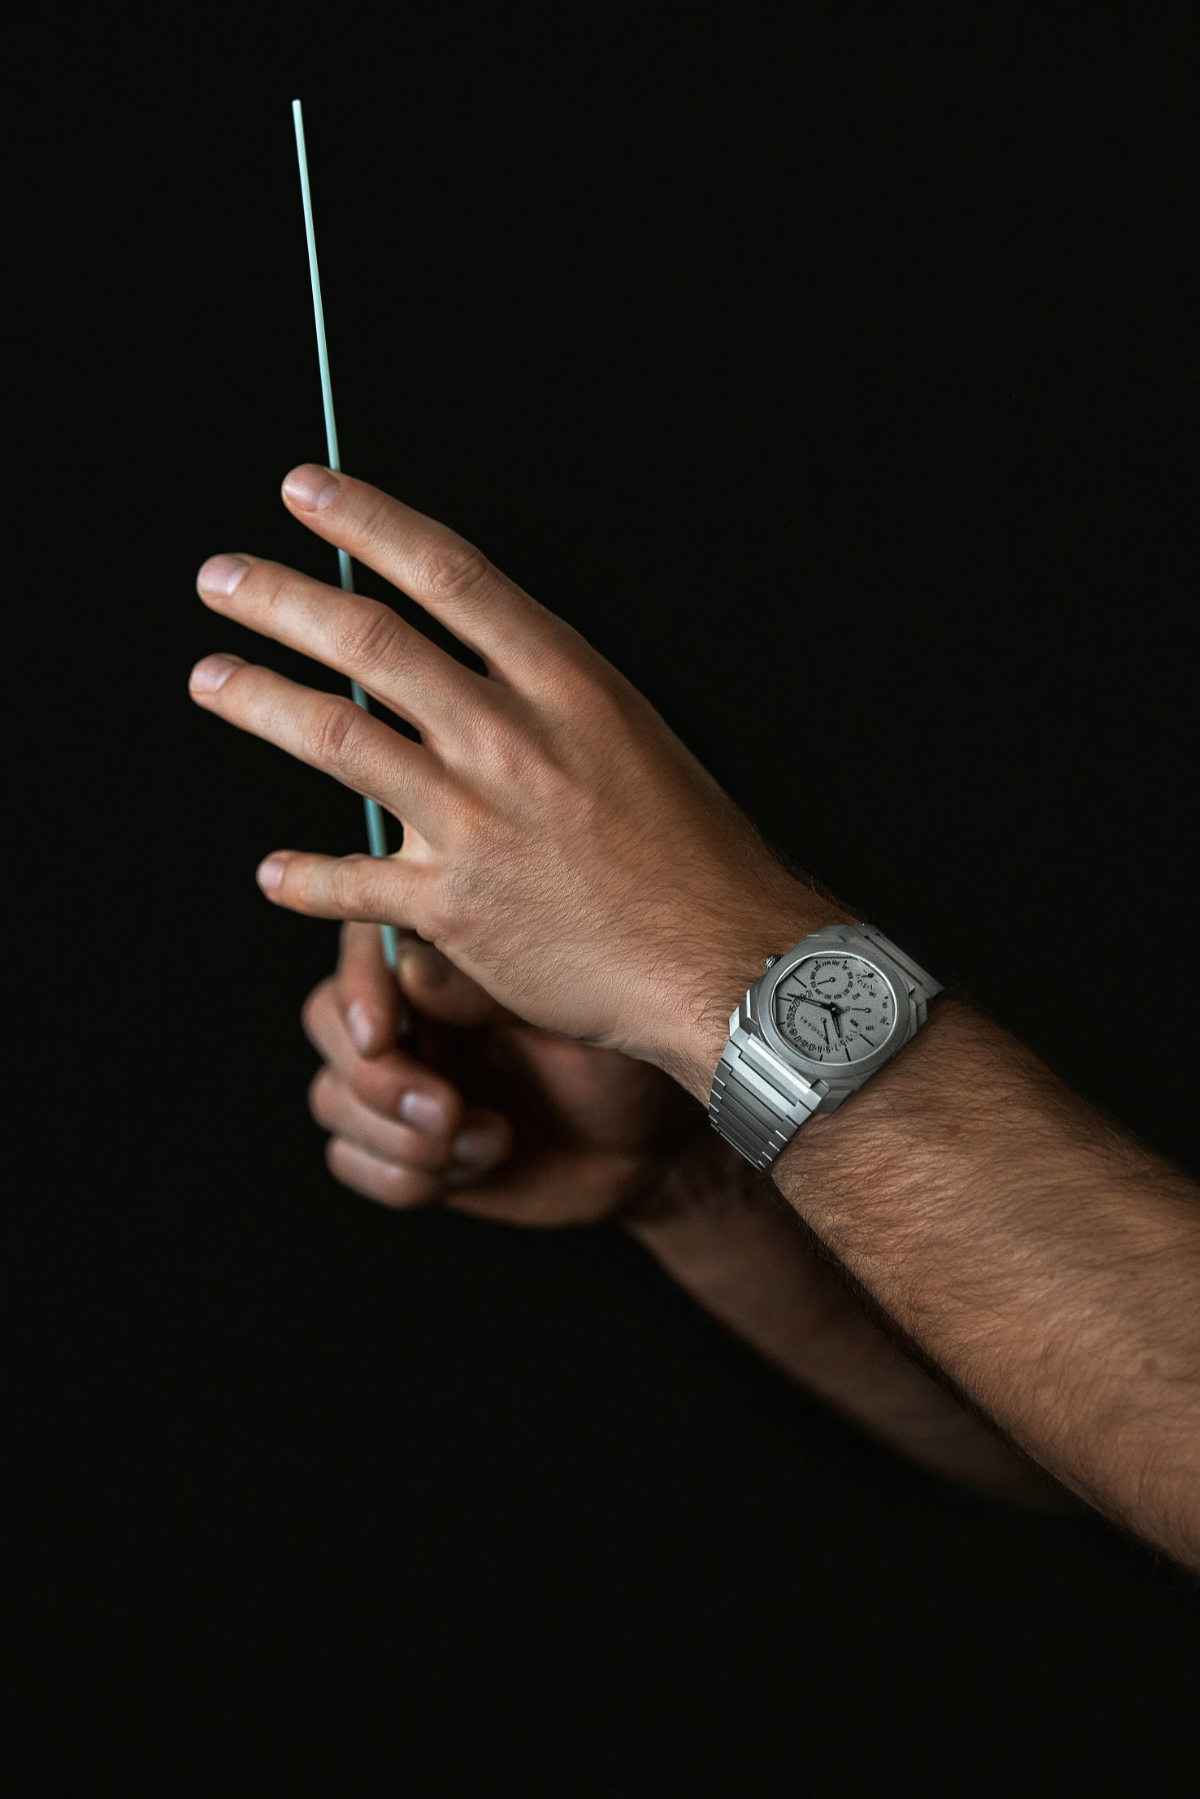 Bulgari Unveiled The New Brand Campaign Starring Global Watches Ambassador Lorenzo Viotti